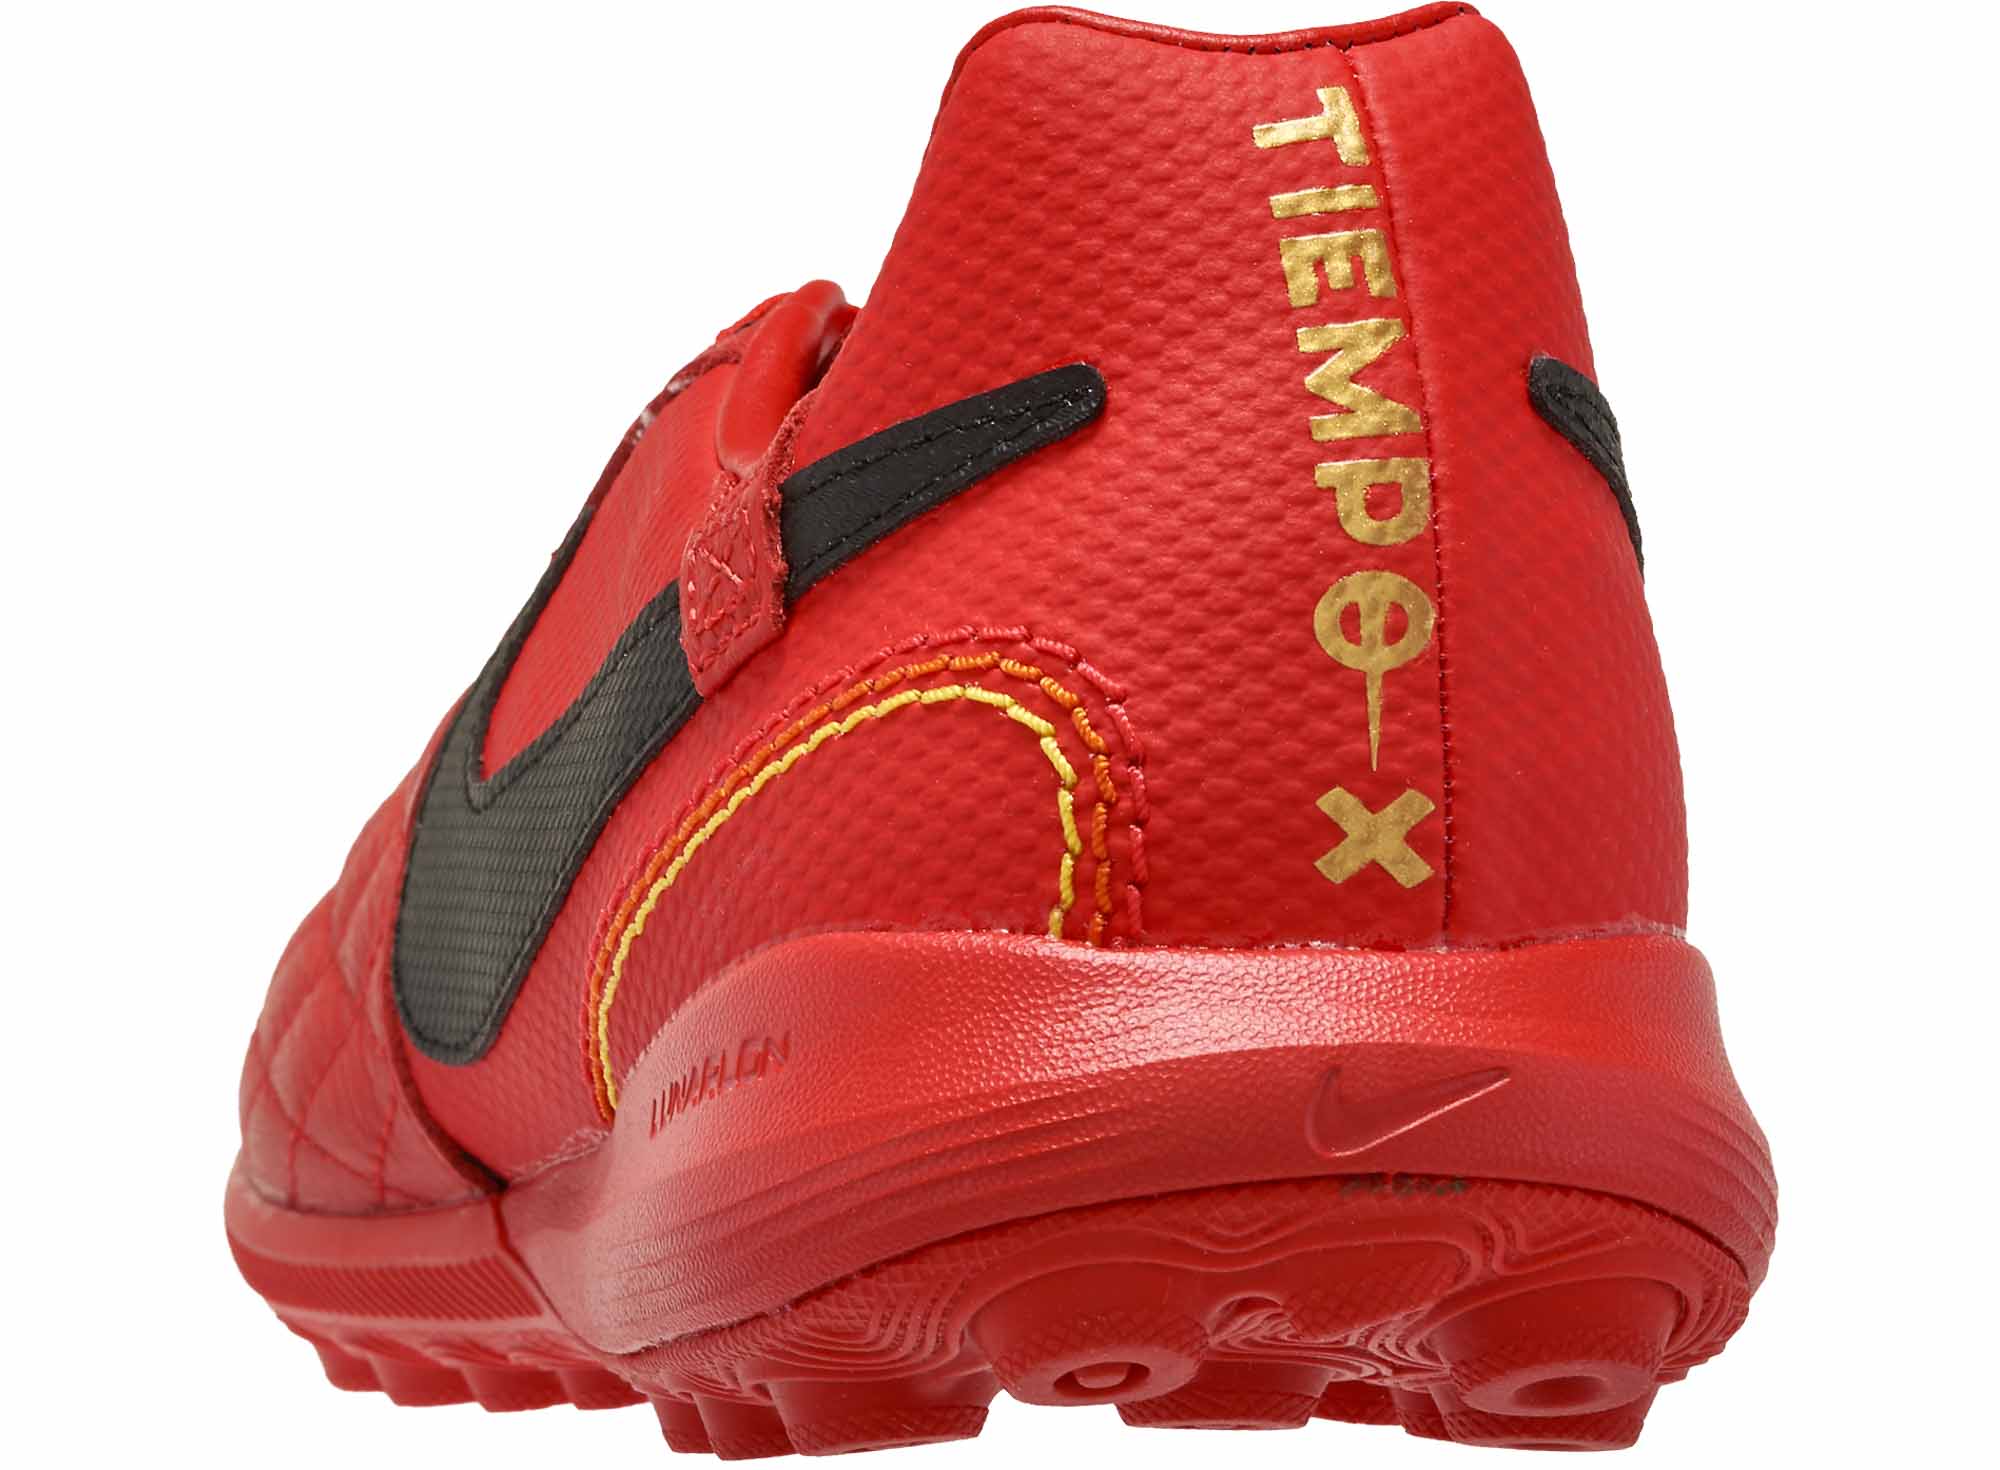 Nike 10R TiempoX Lunar Legend 7 Pro TF - University Red/Black/Metallic Gold  - Soccer Master